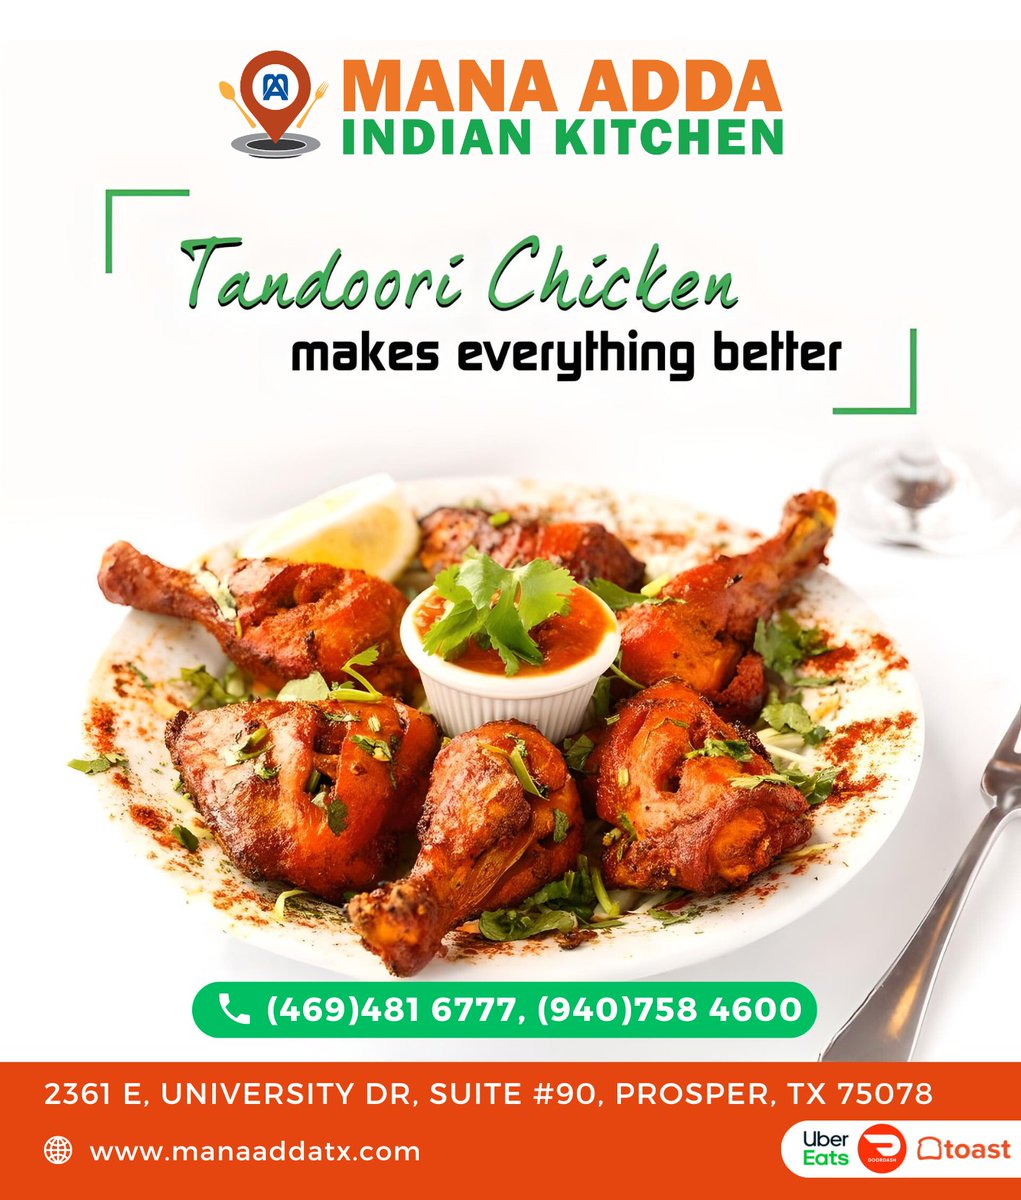 🔥 Craving authentic Tandoori Chicken? Look no further! #TandooriChicken #IndianCuisine #FoodieFinds #DeliciousEats #ProsperTX #FoodLovers #SpicyChicken #FoodHeaven #YumYum #FoodGoals #TandooriLove #FoodPhotography #EatLocal #GoodEats #TasteOfIndia #FoodForTheSoul #NomNom